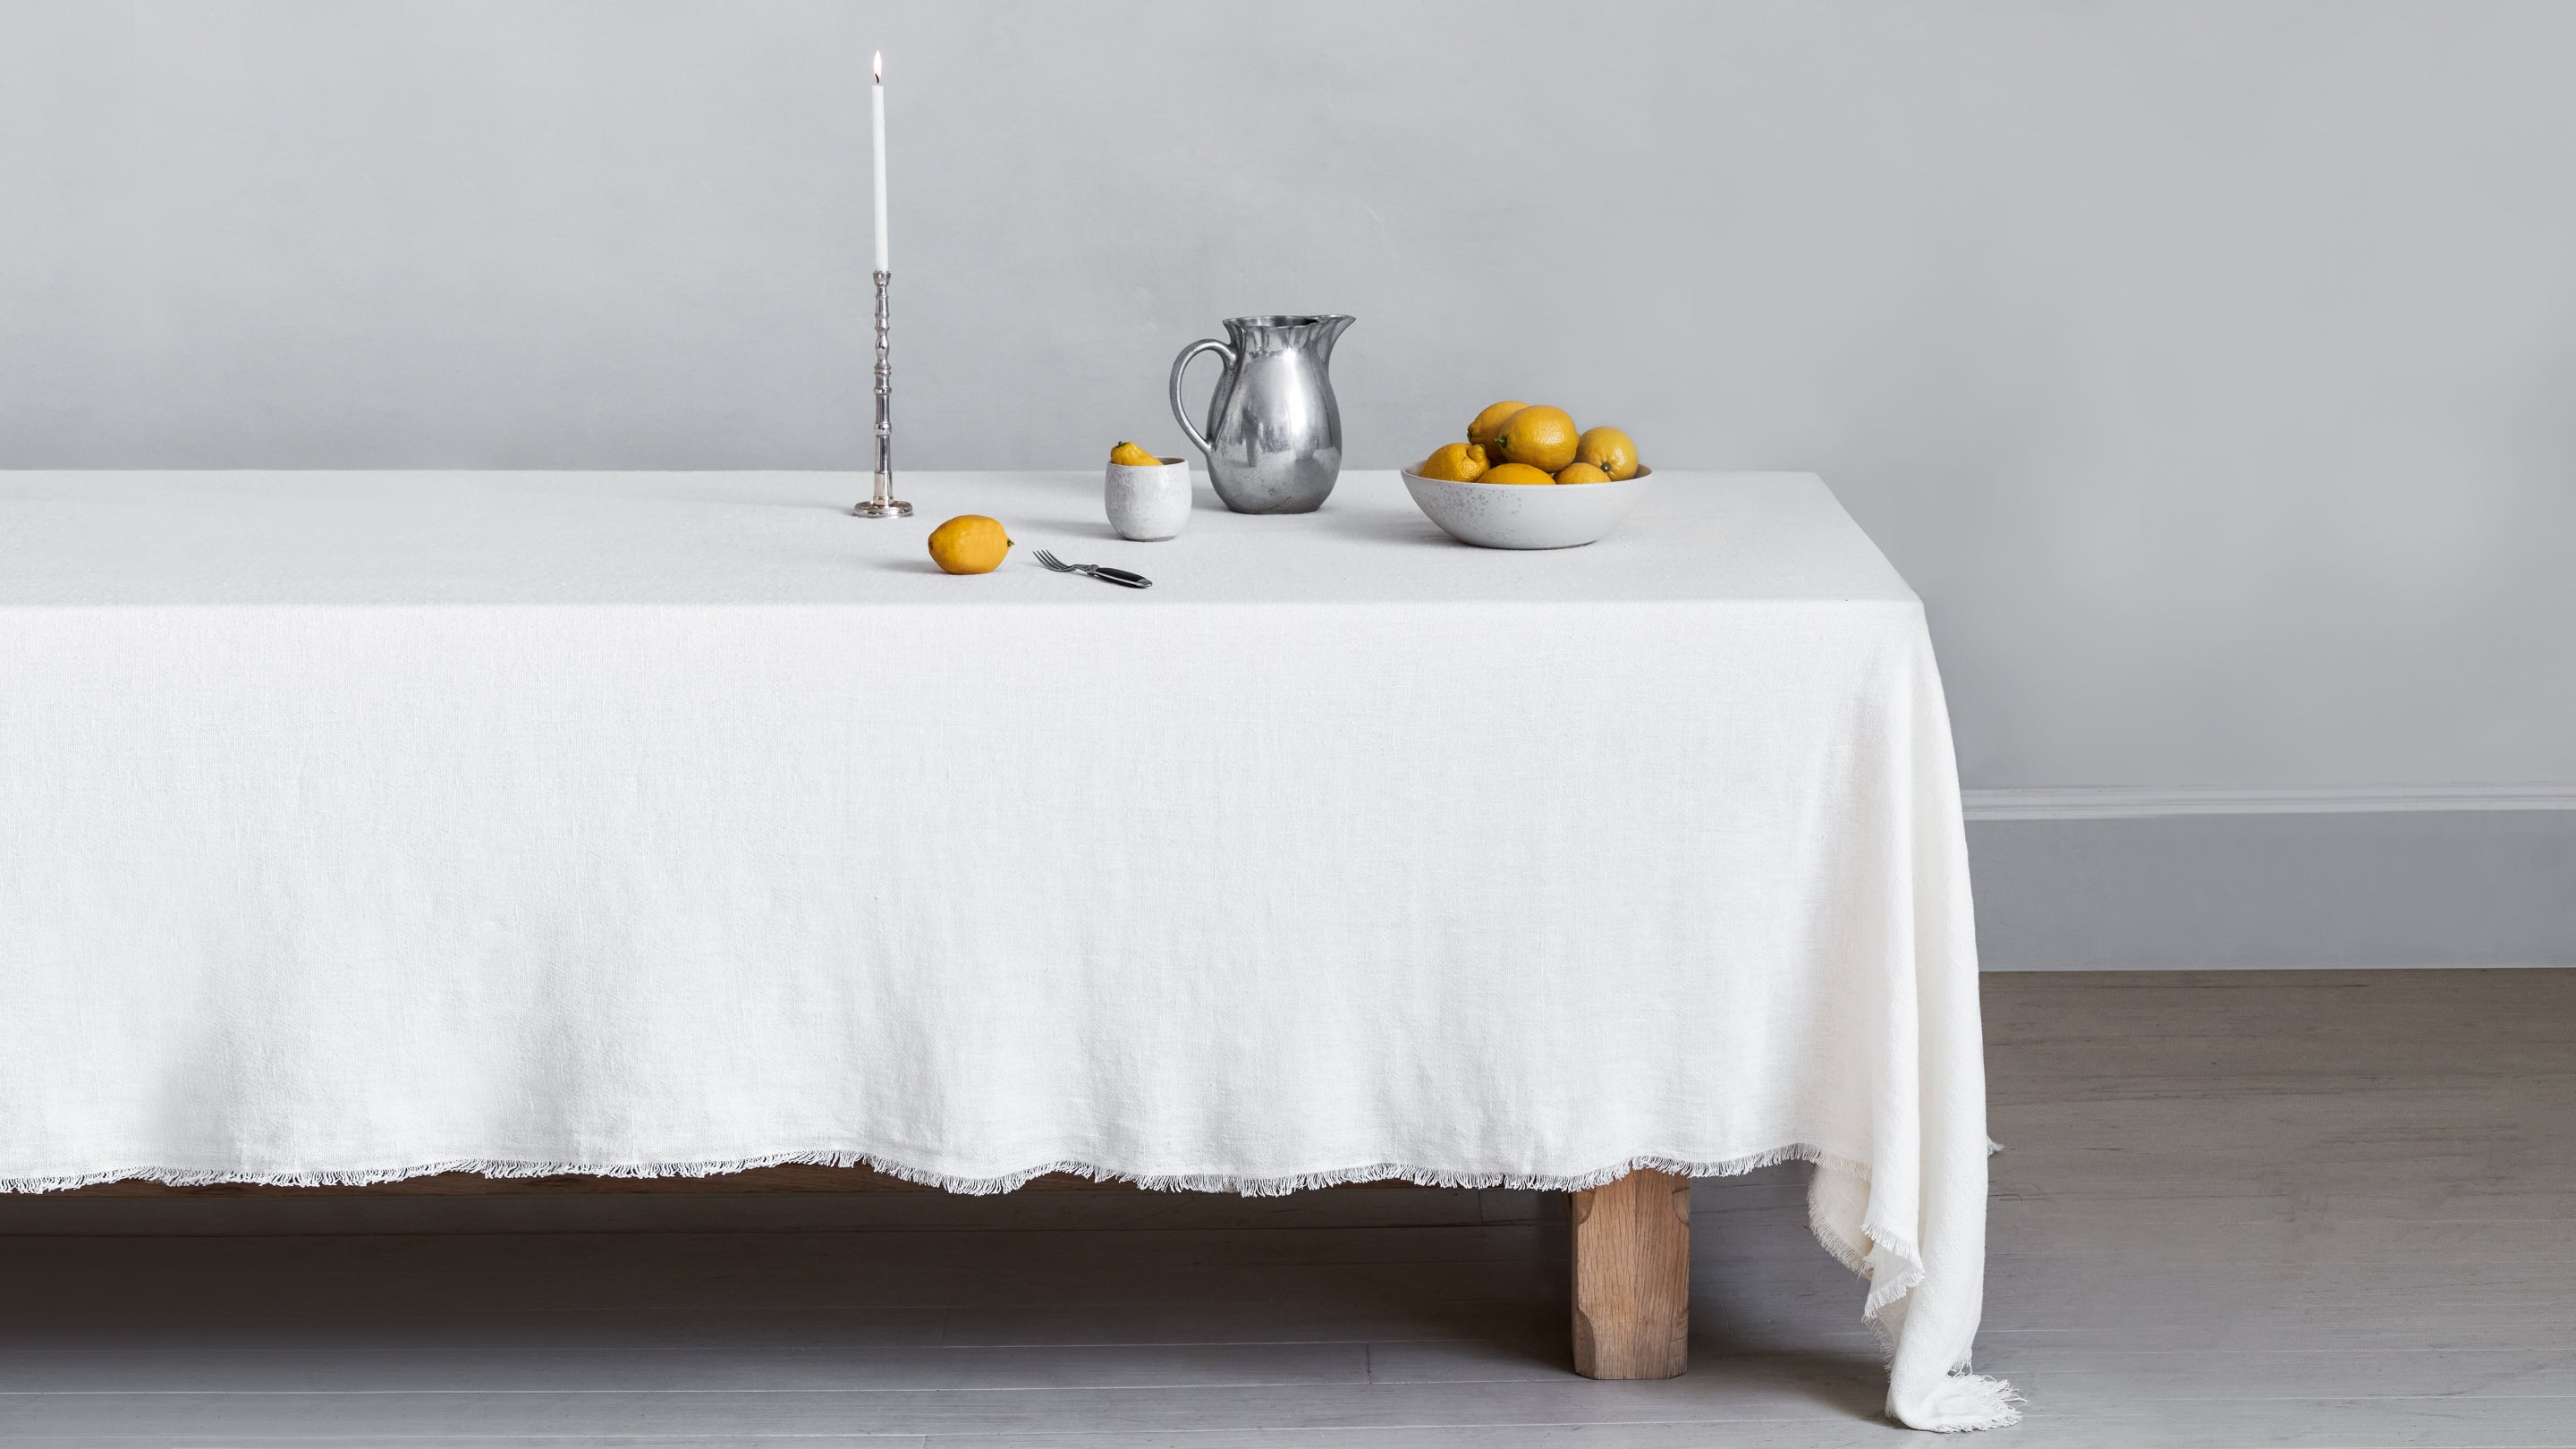 Kitchen Towels & Table Linens, Tablecloths, Placemats & More